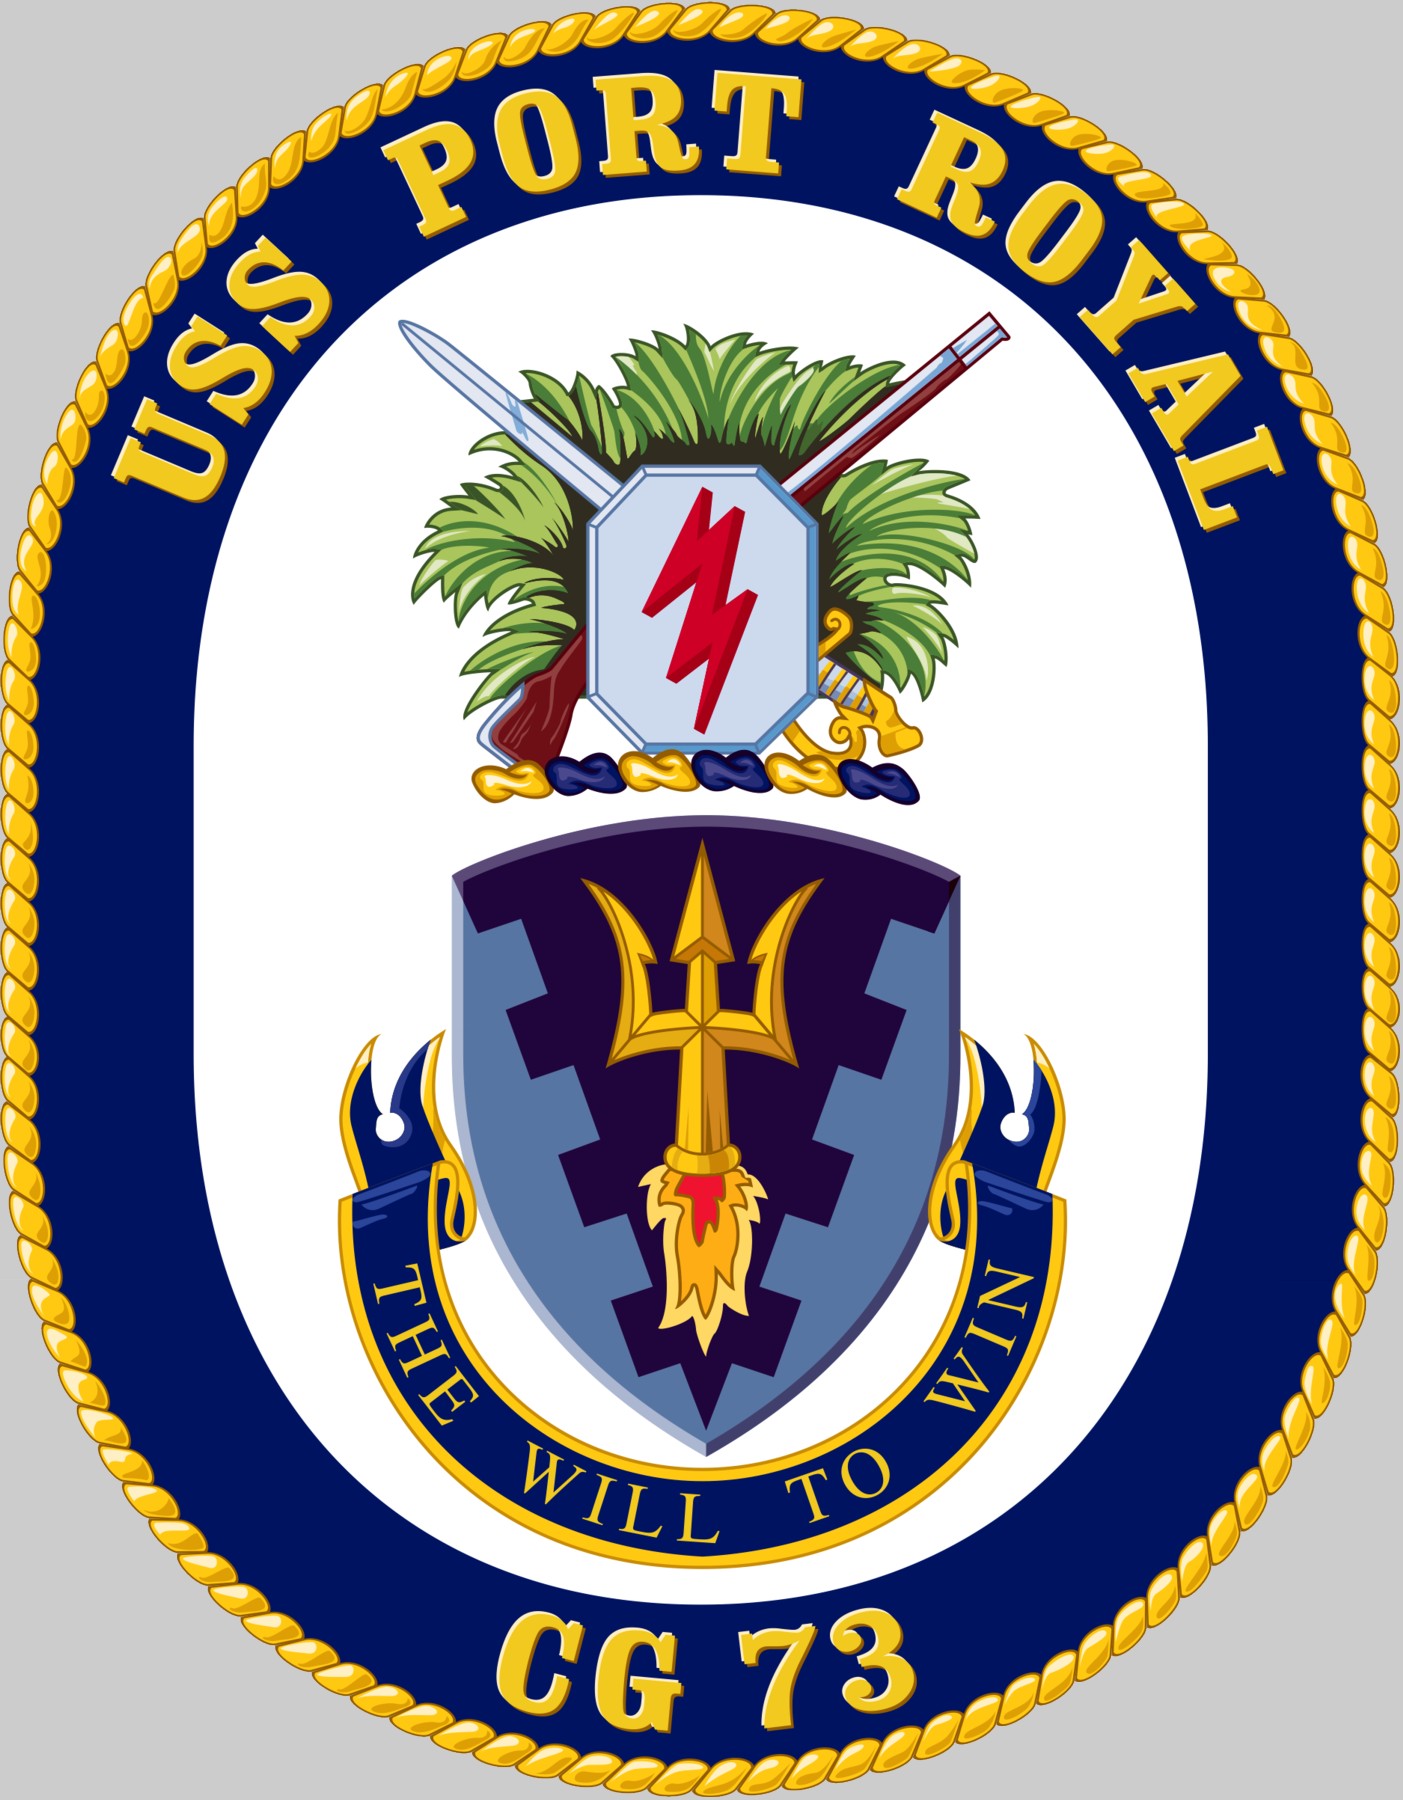 cg-73 uss port royal insignia crest patch badge ticonderoga class cruiser us navy 02x